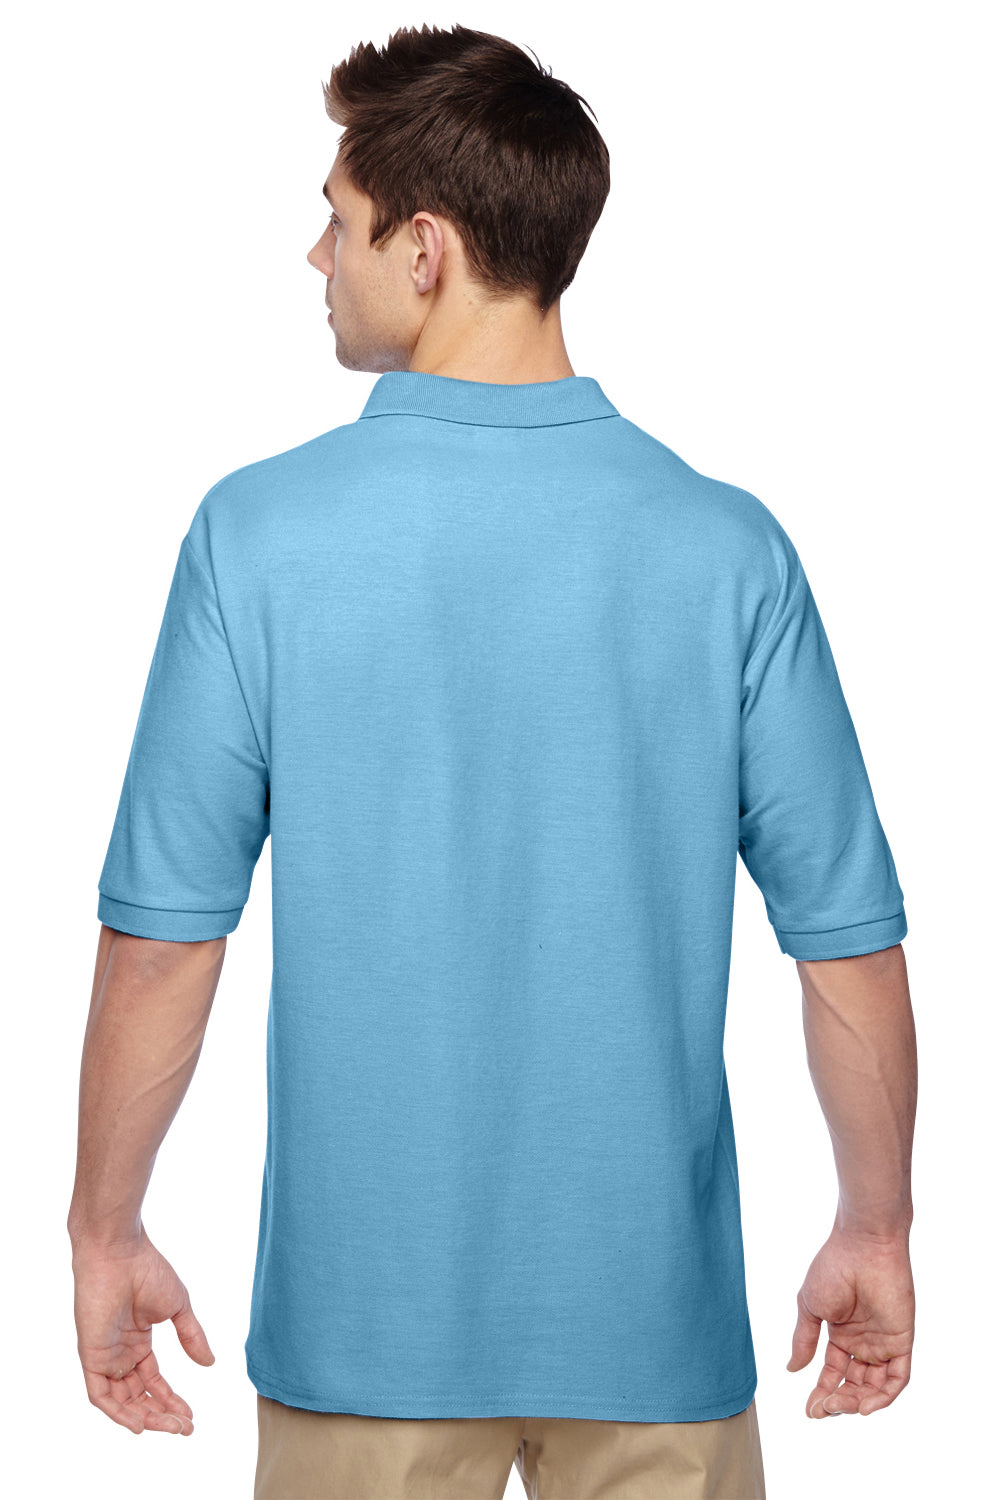 Jerzees 537MSR Mens Easy Care Moisture Wicking Short Sleeve Polo Shirt Light Blue Back